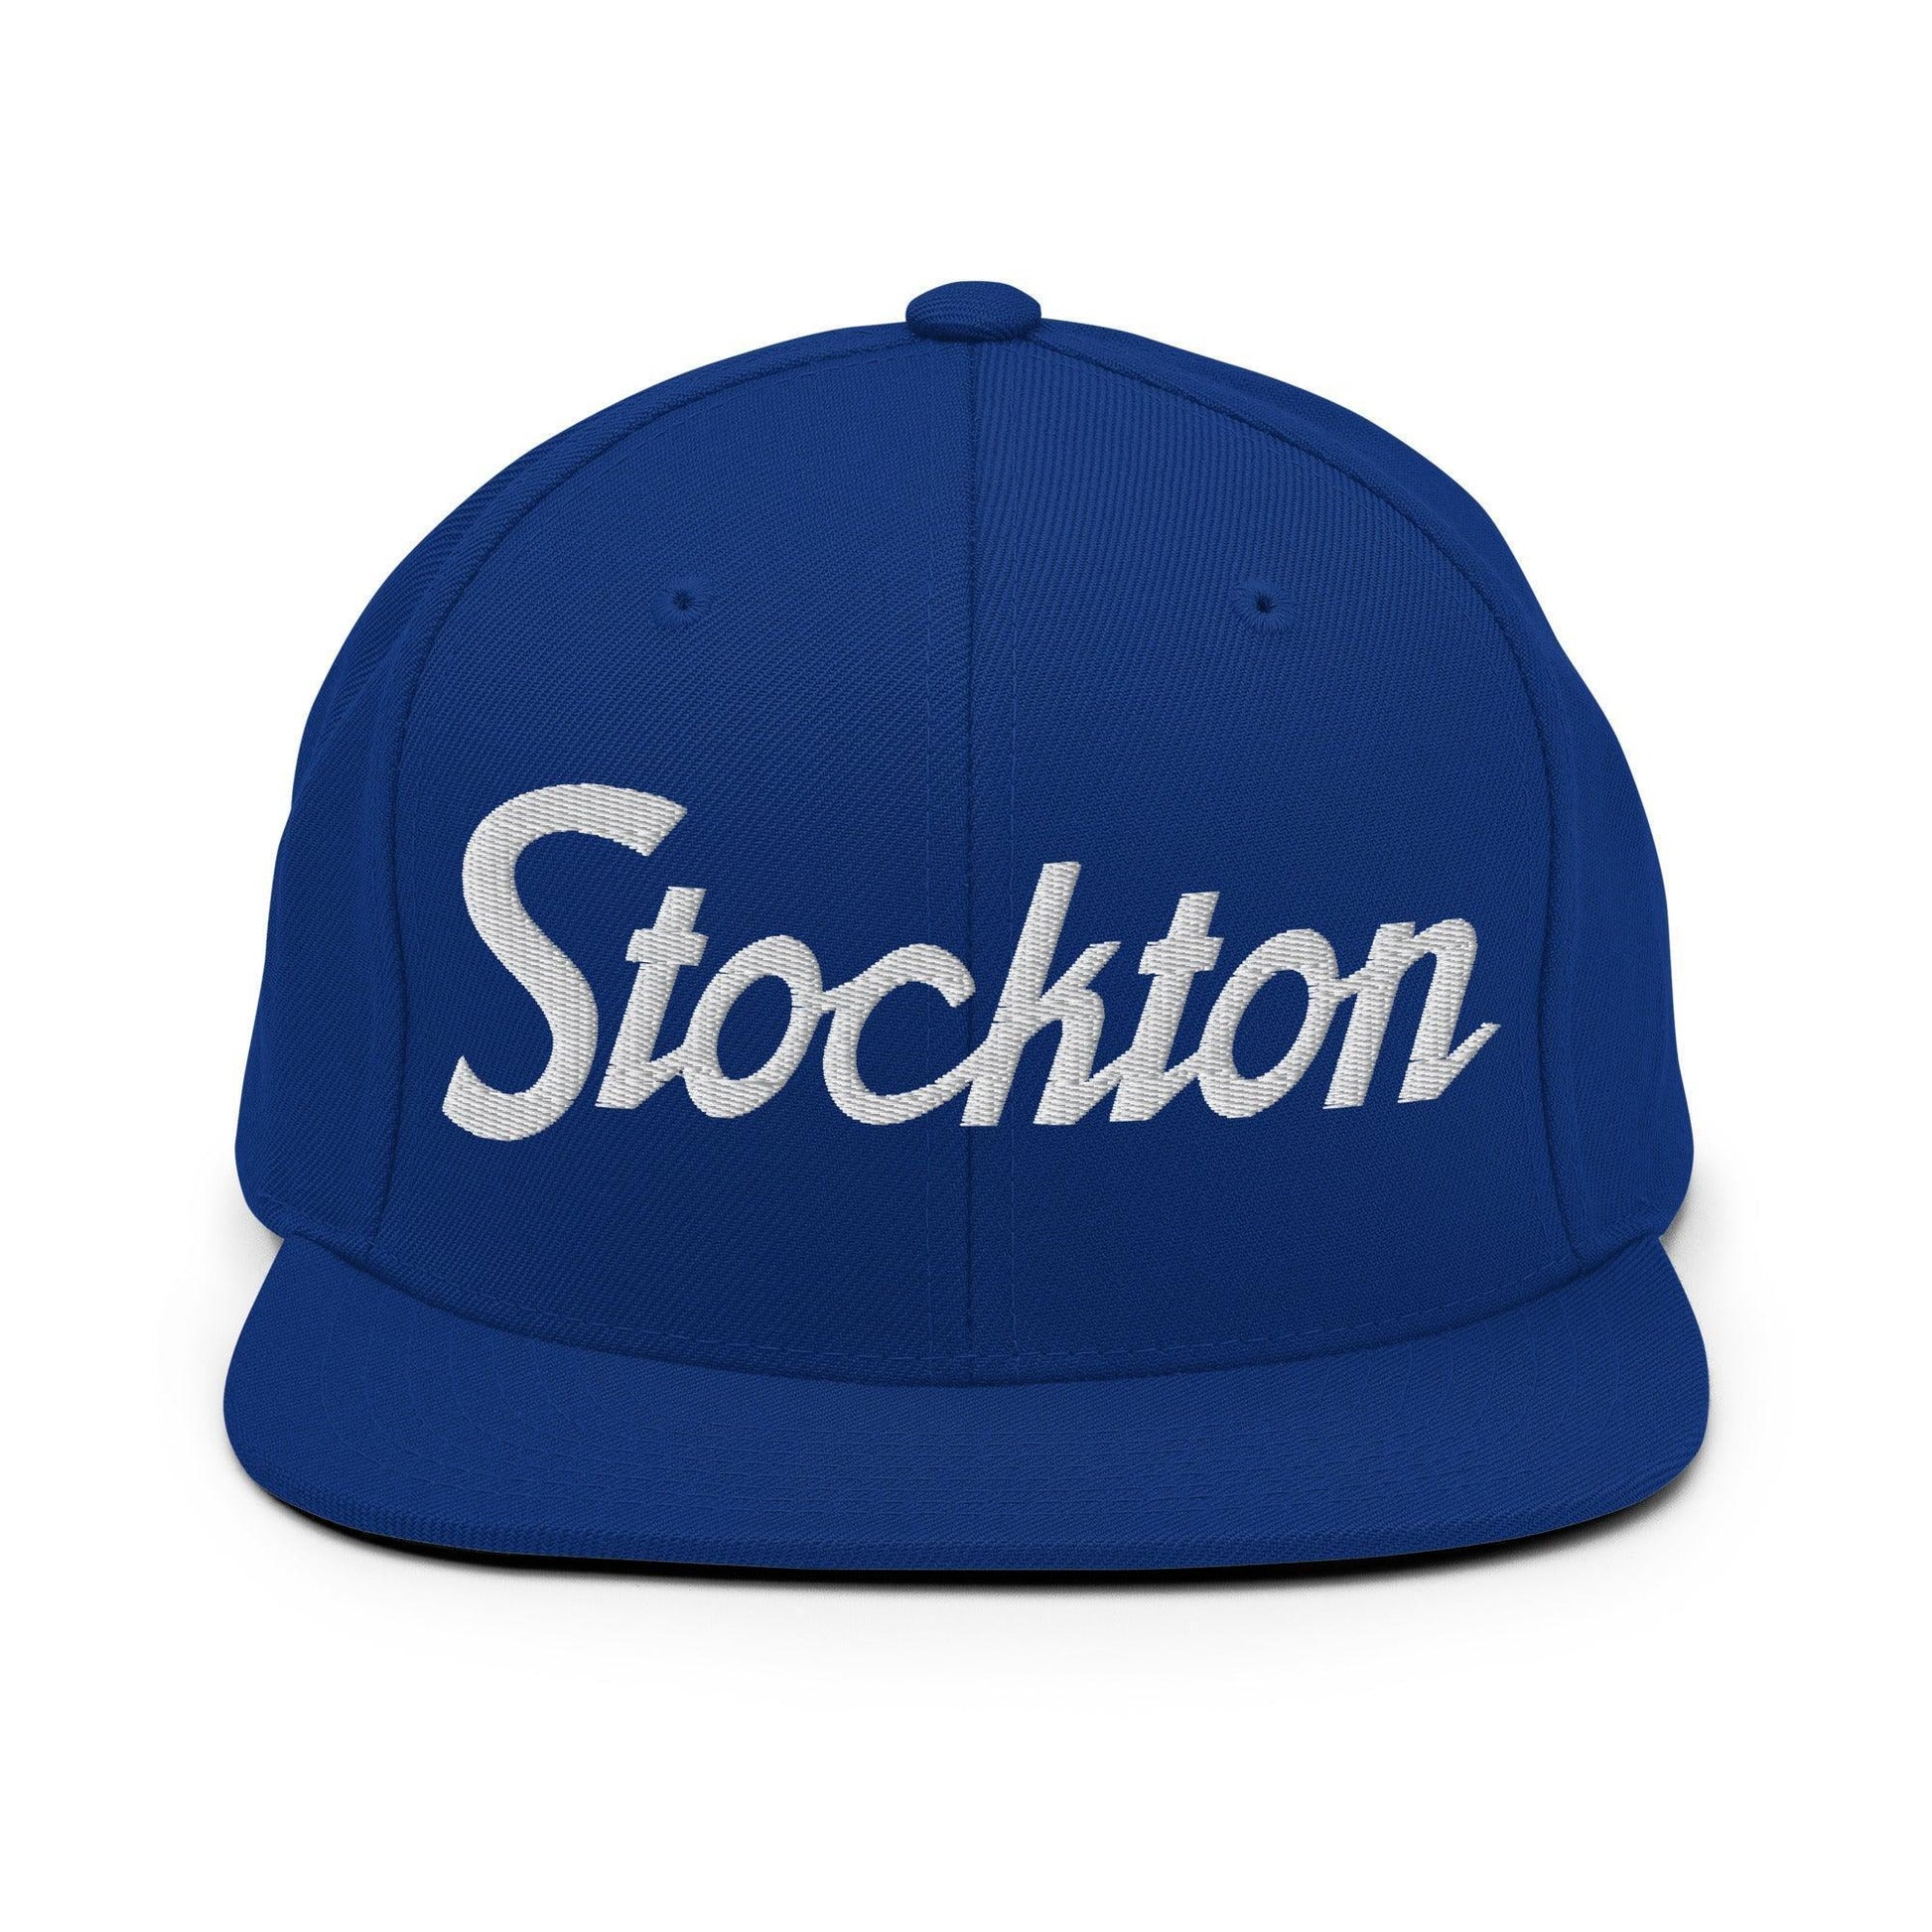 Stockton Script Snapback Hat Royal Blue